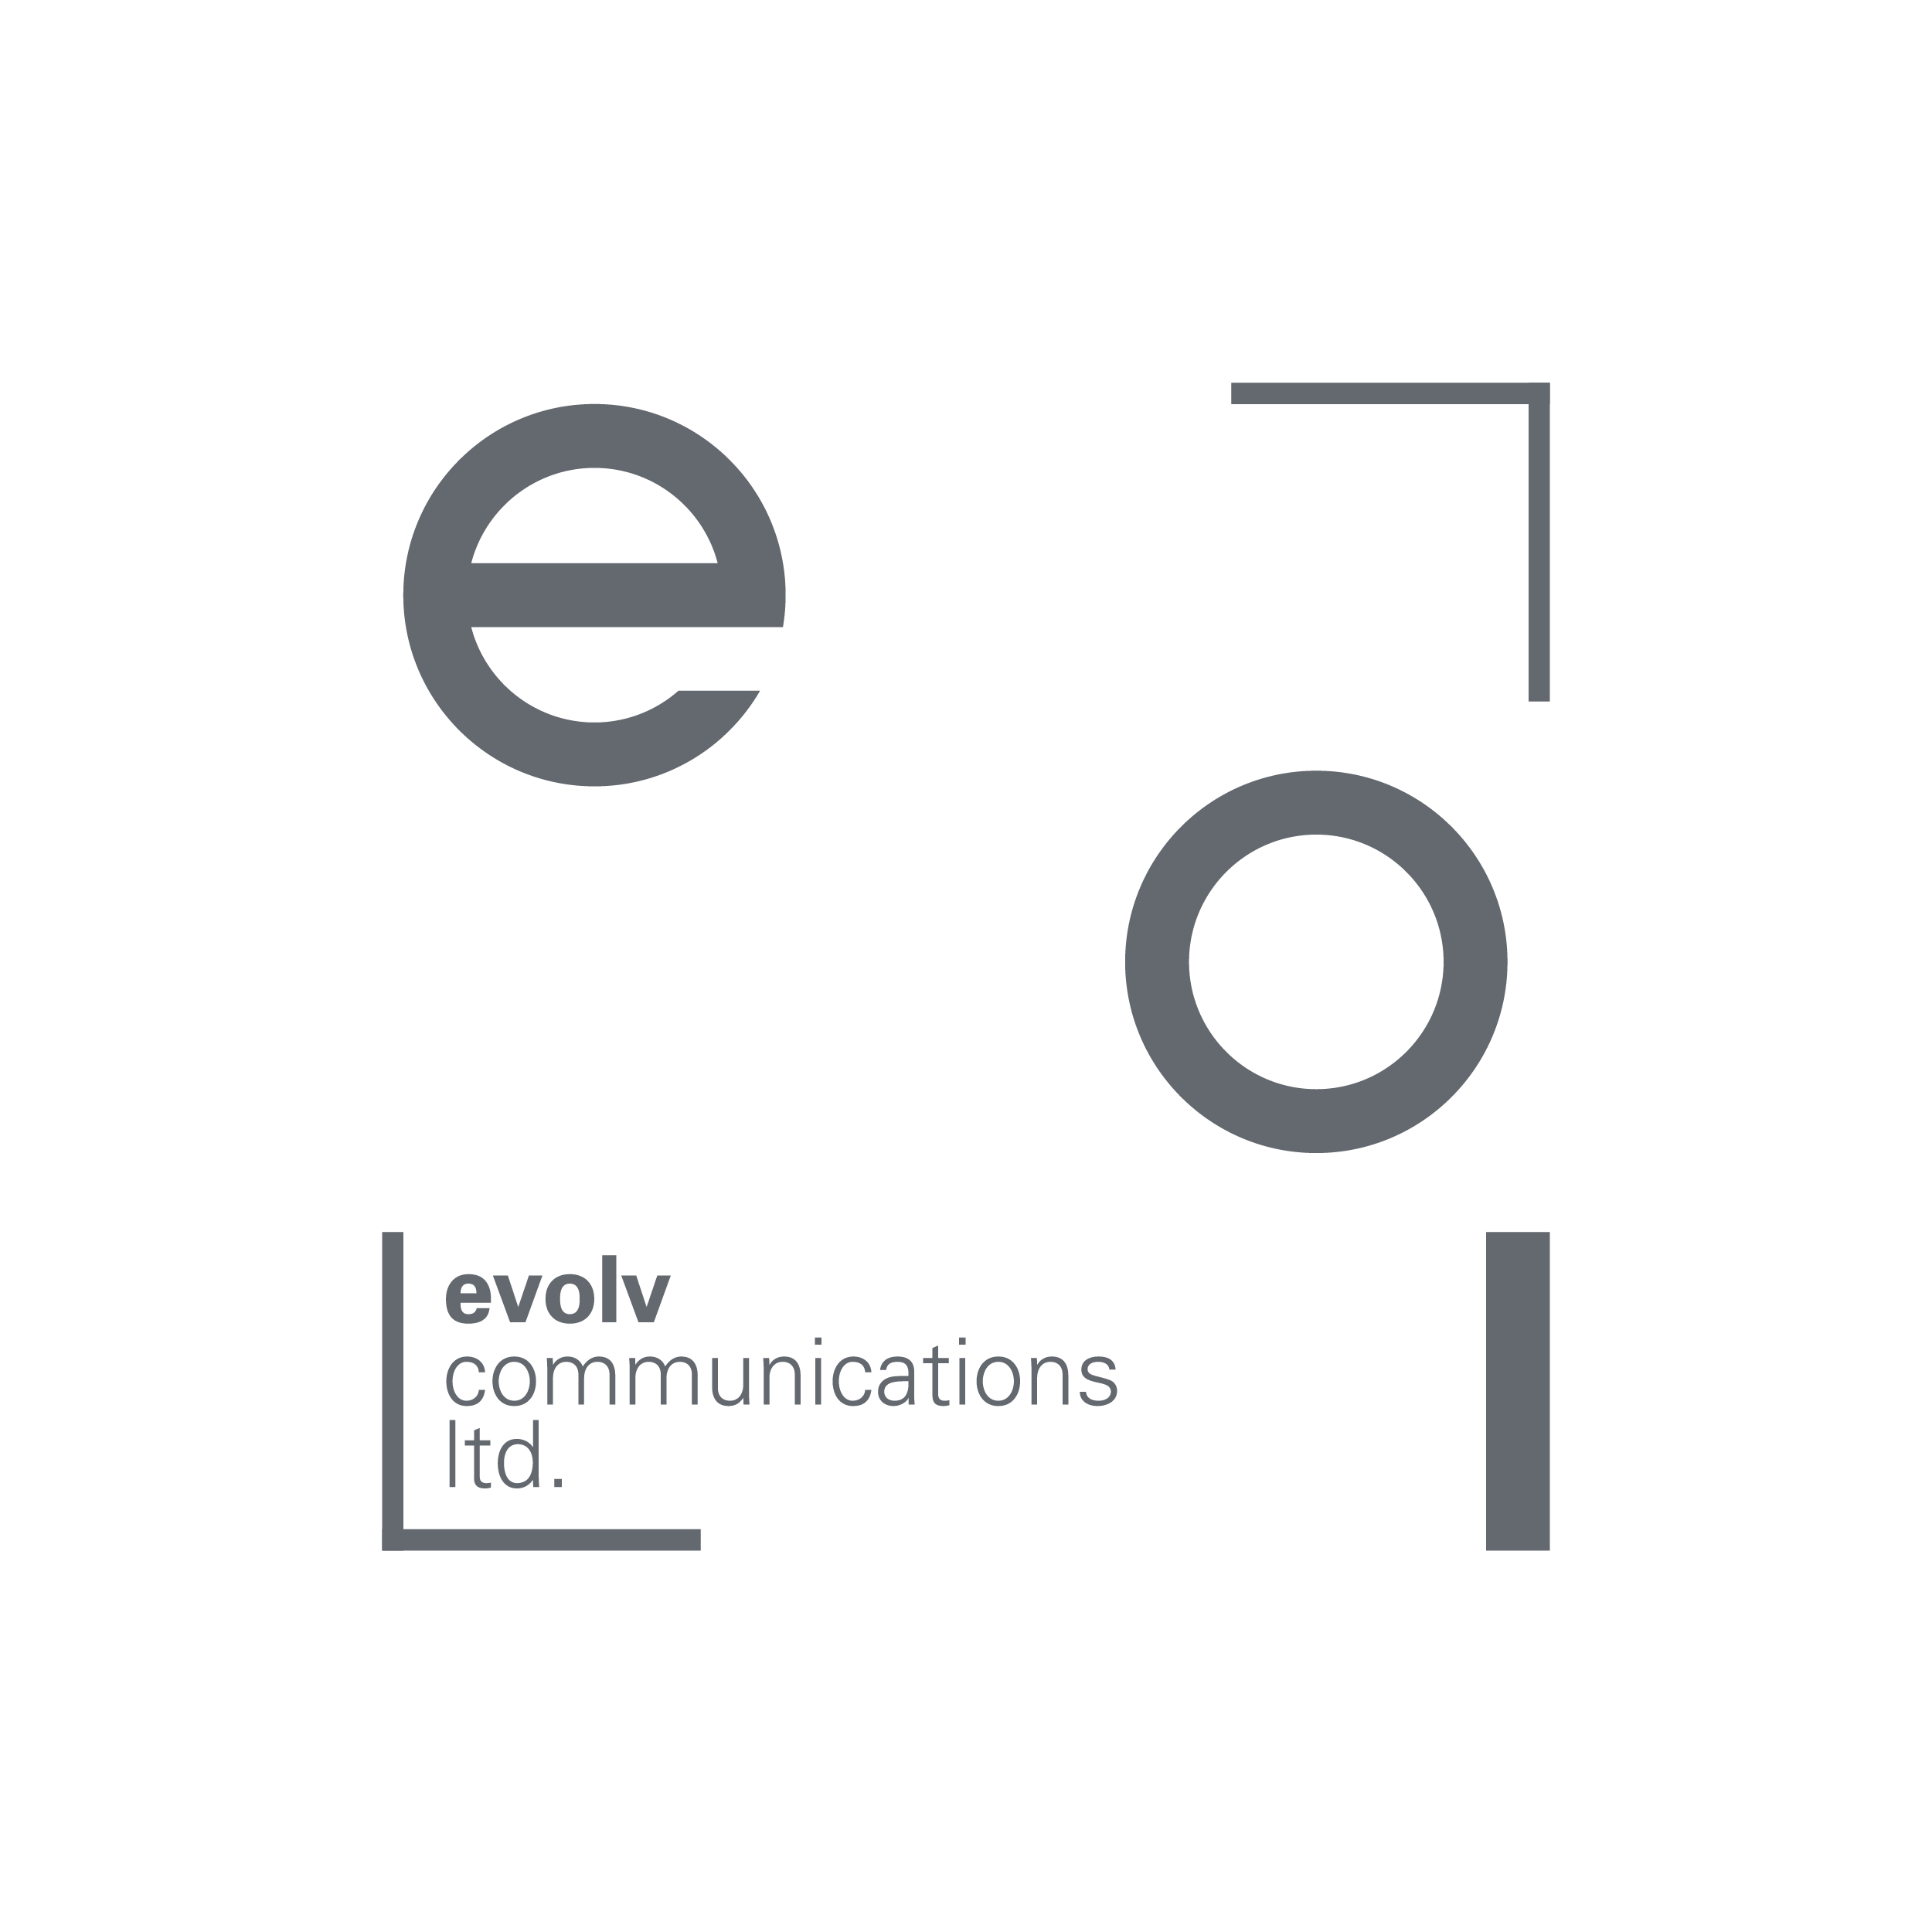 Evolv Communications Ltd. company logo